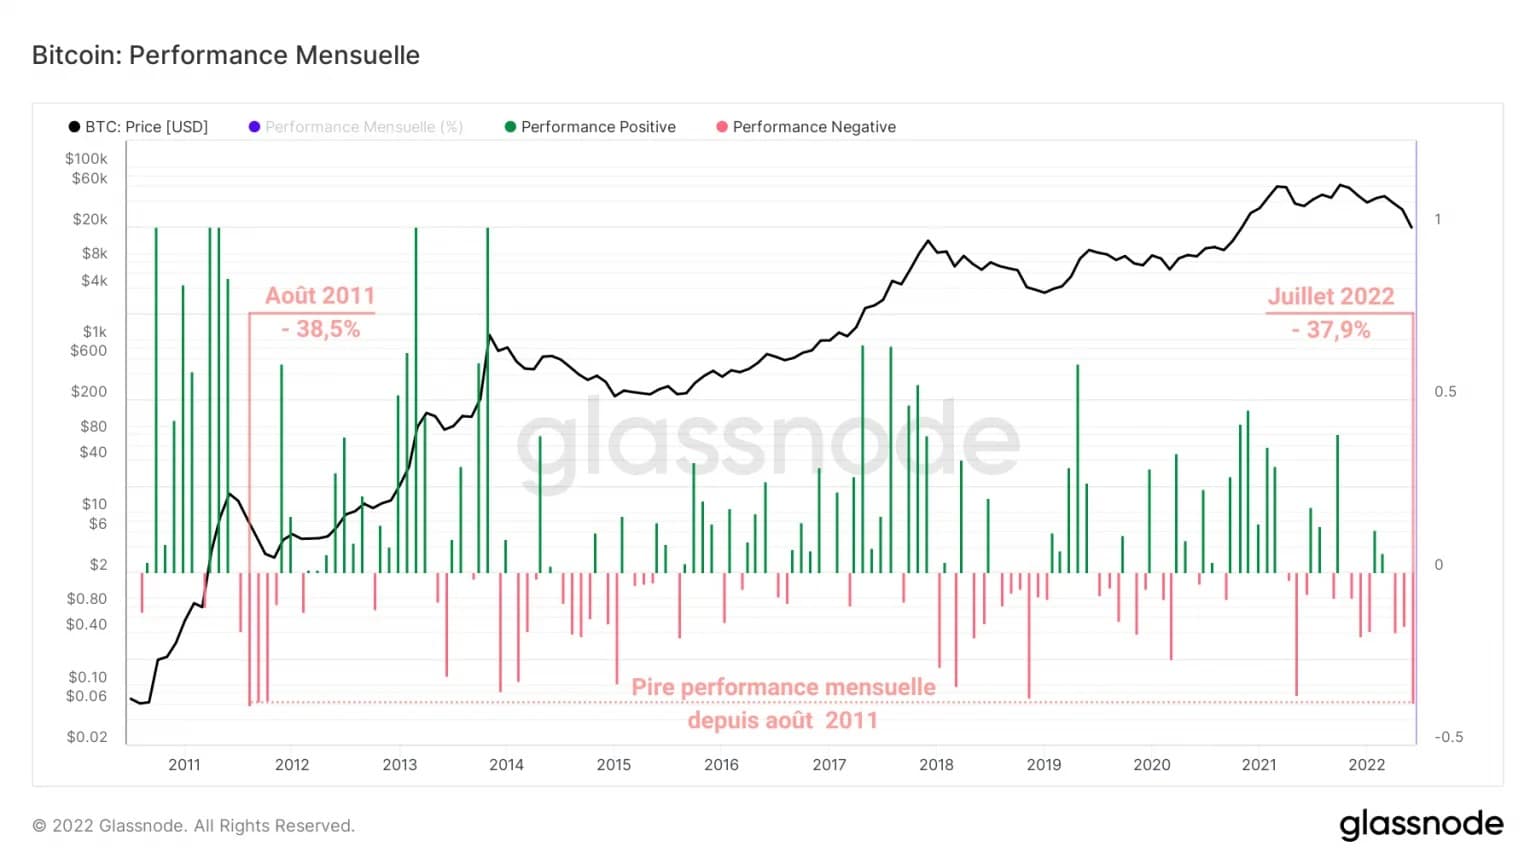 Figure 2: Monthly performance of bitcoin (BTC) price